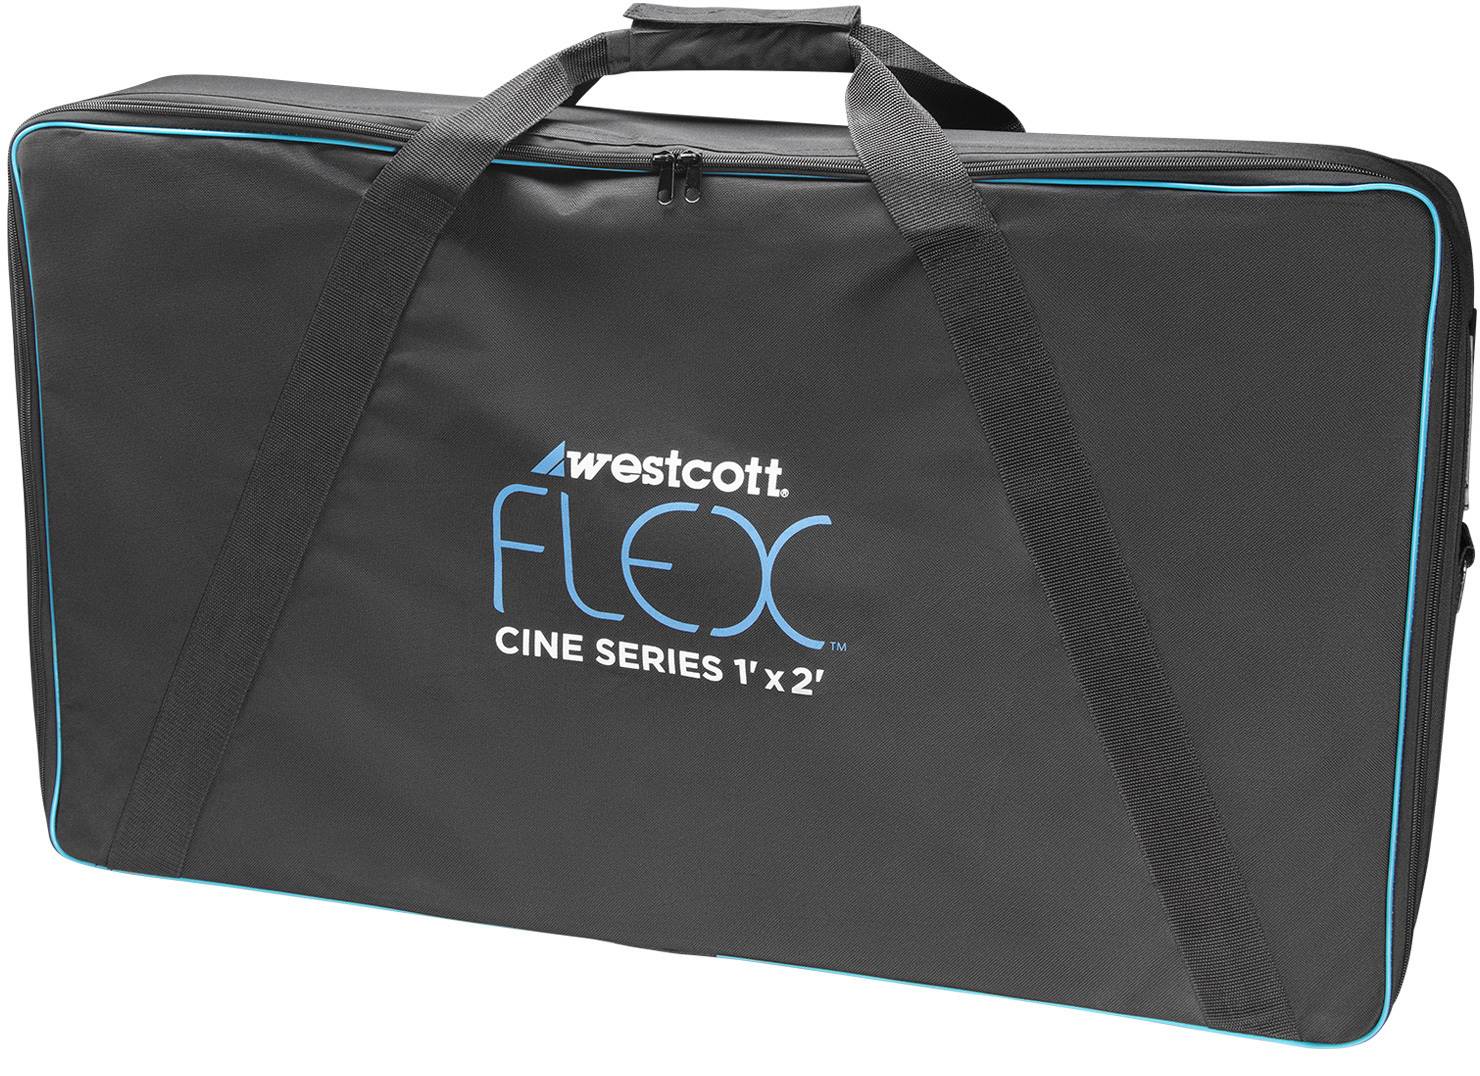 Westcott Flex Cine Gear Bag (1' x 2')